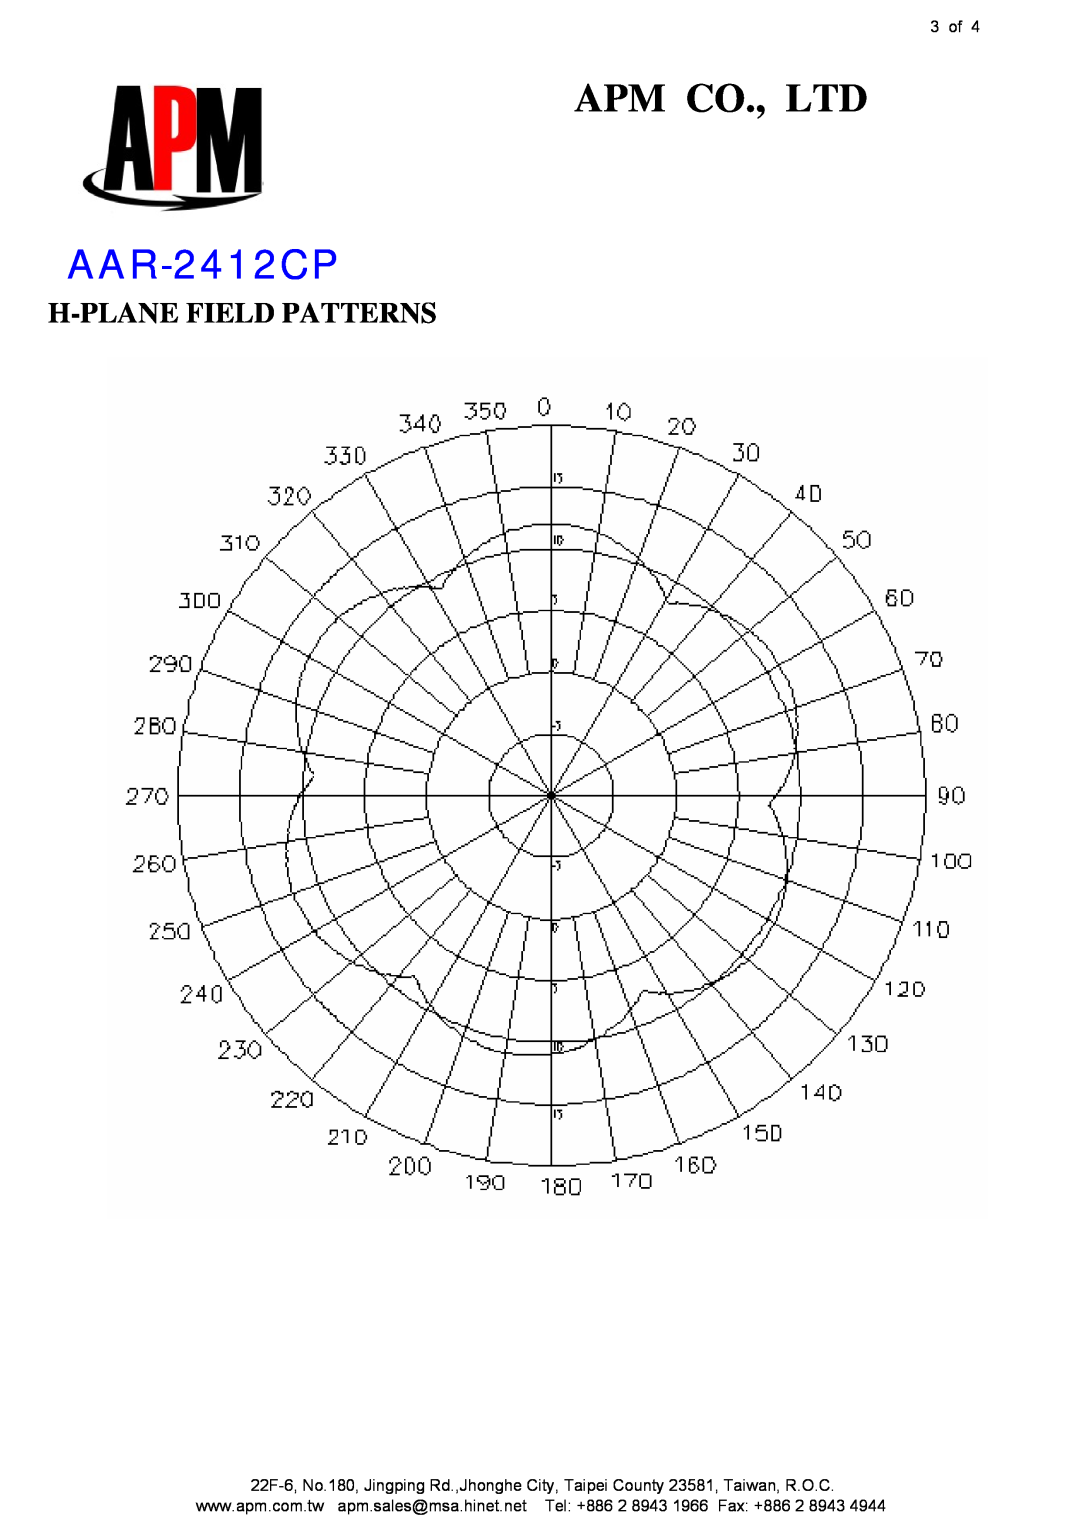 APM AAR-2412CP manual H-Planefield Patterns, 3 of 